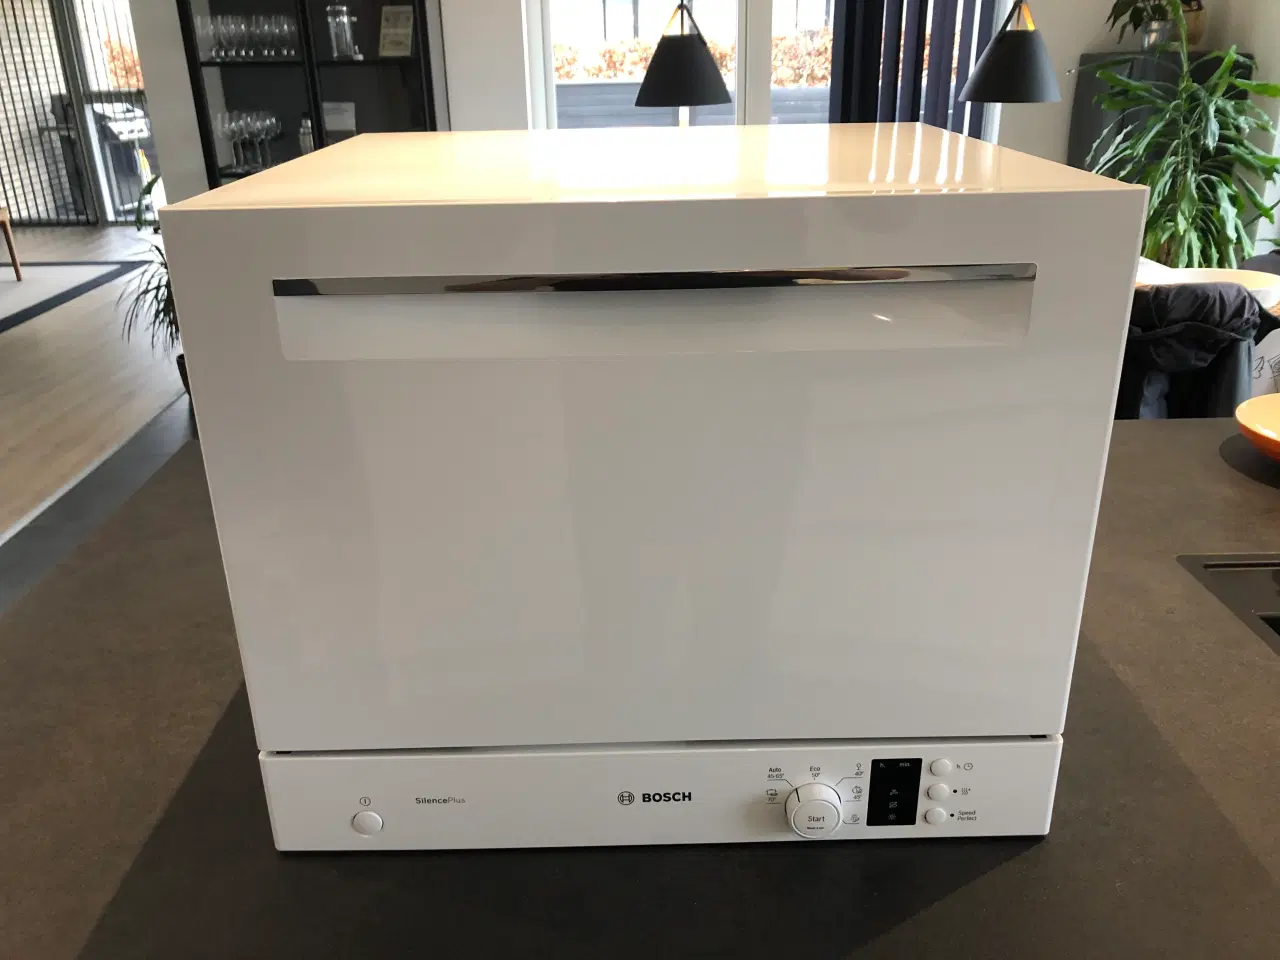 Billede 1 - Bosch bord opvaskemaskine (Frederikshavn)